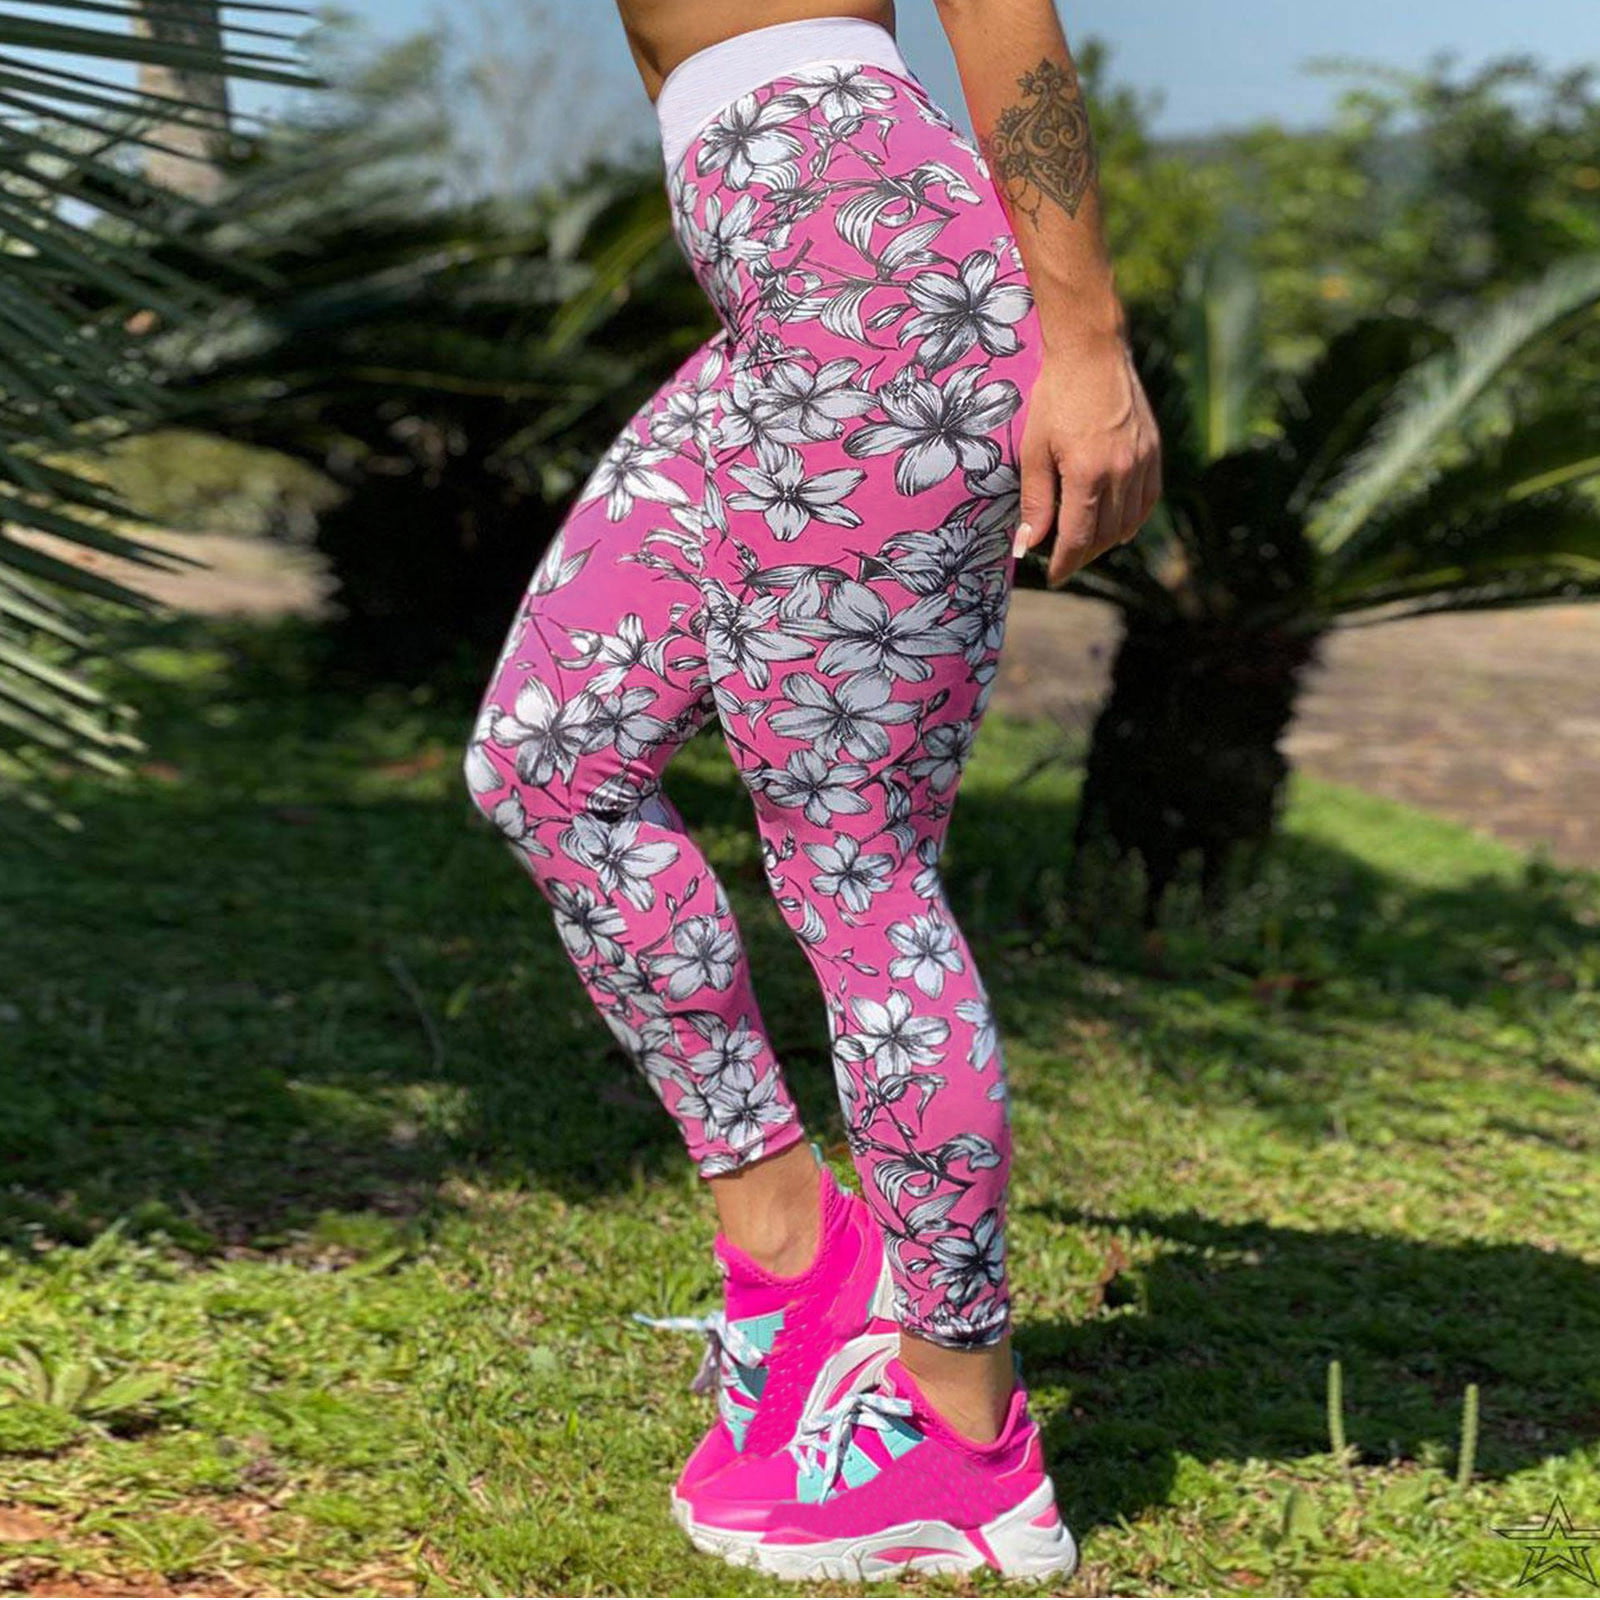 Women's Fashion Printed Workout Leggings Fitness Sports Gym Running Yoga  Pants Yoga Pants Pink XXXL